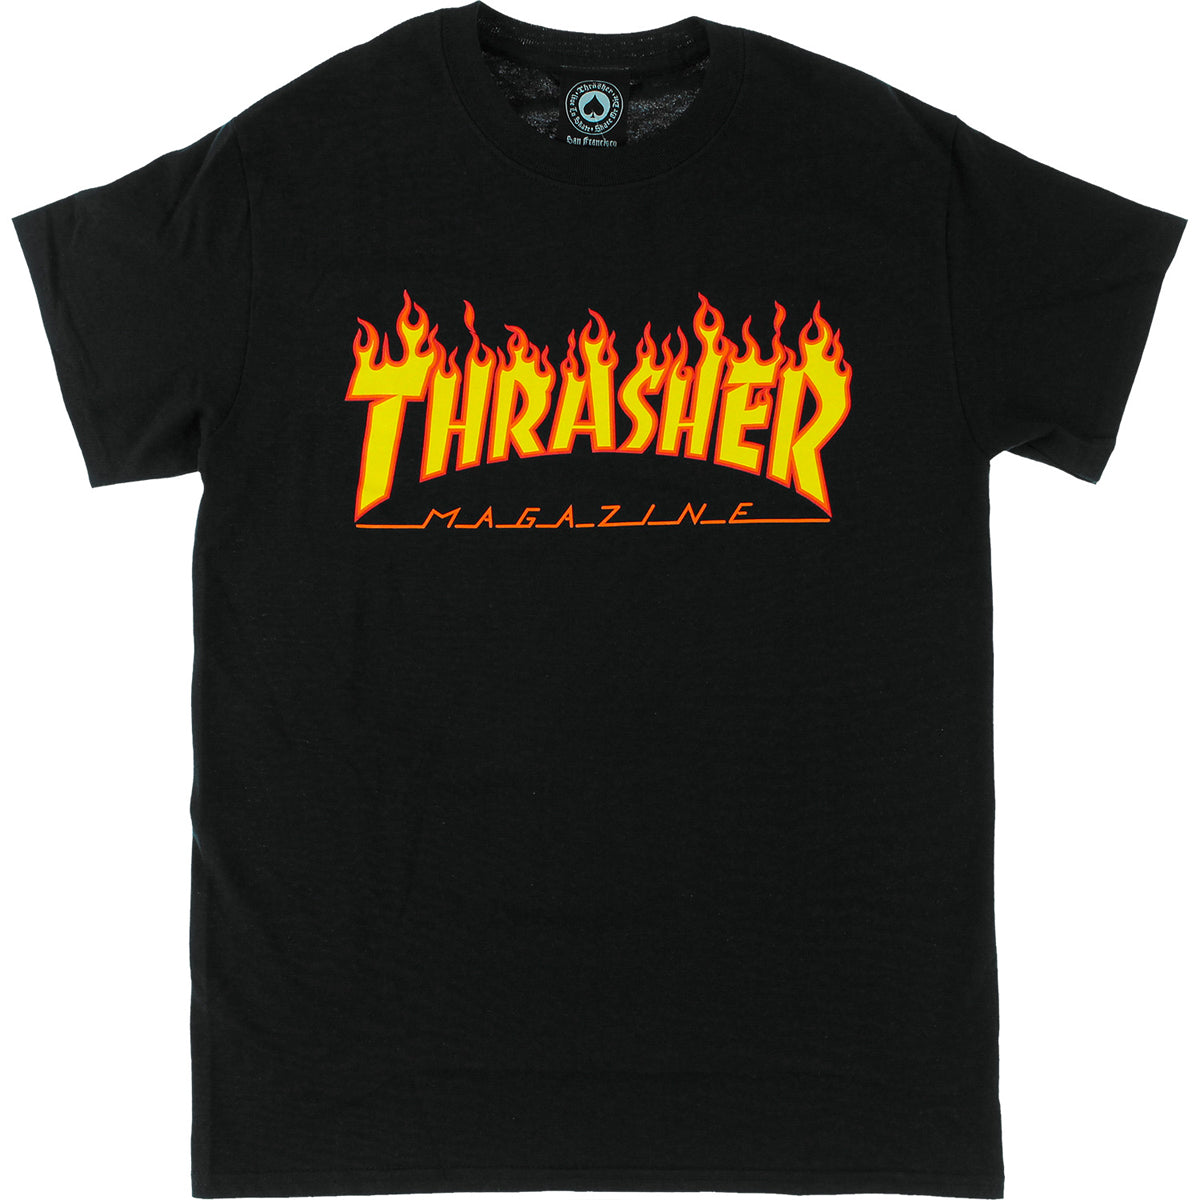 Thrasher Flame Tee Shirt